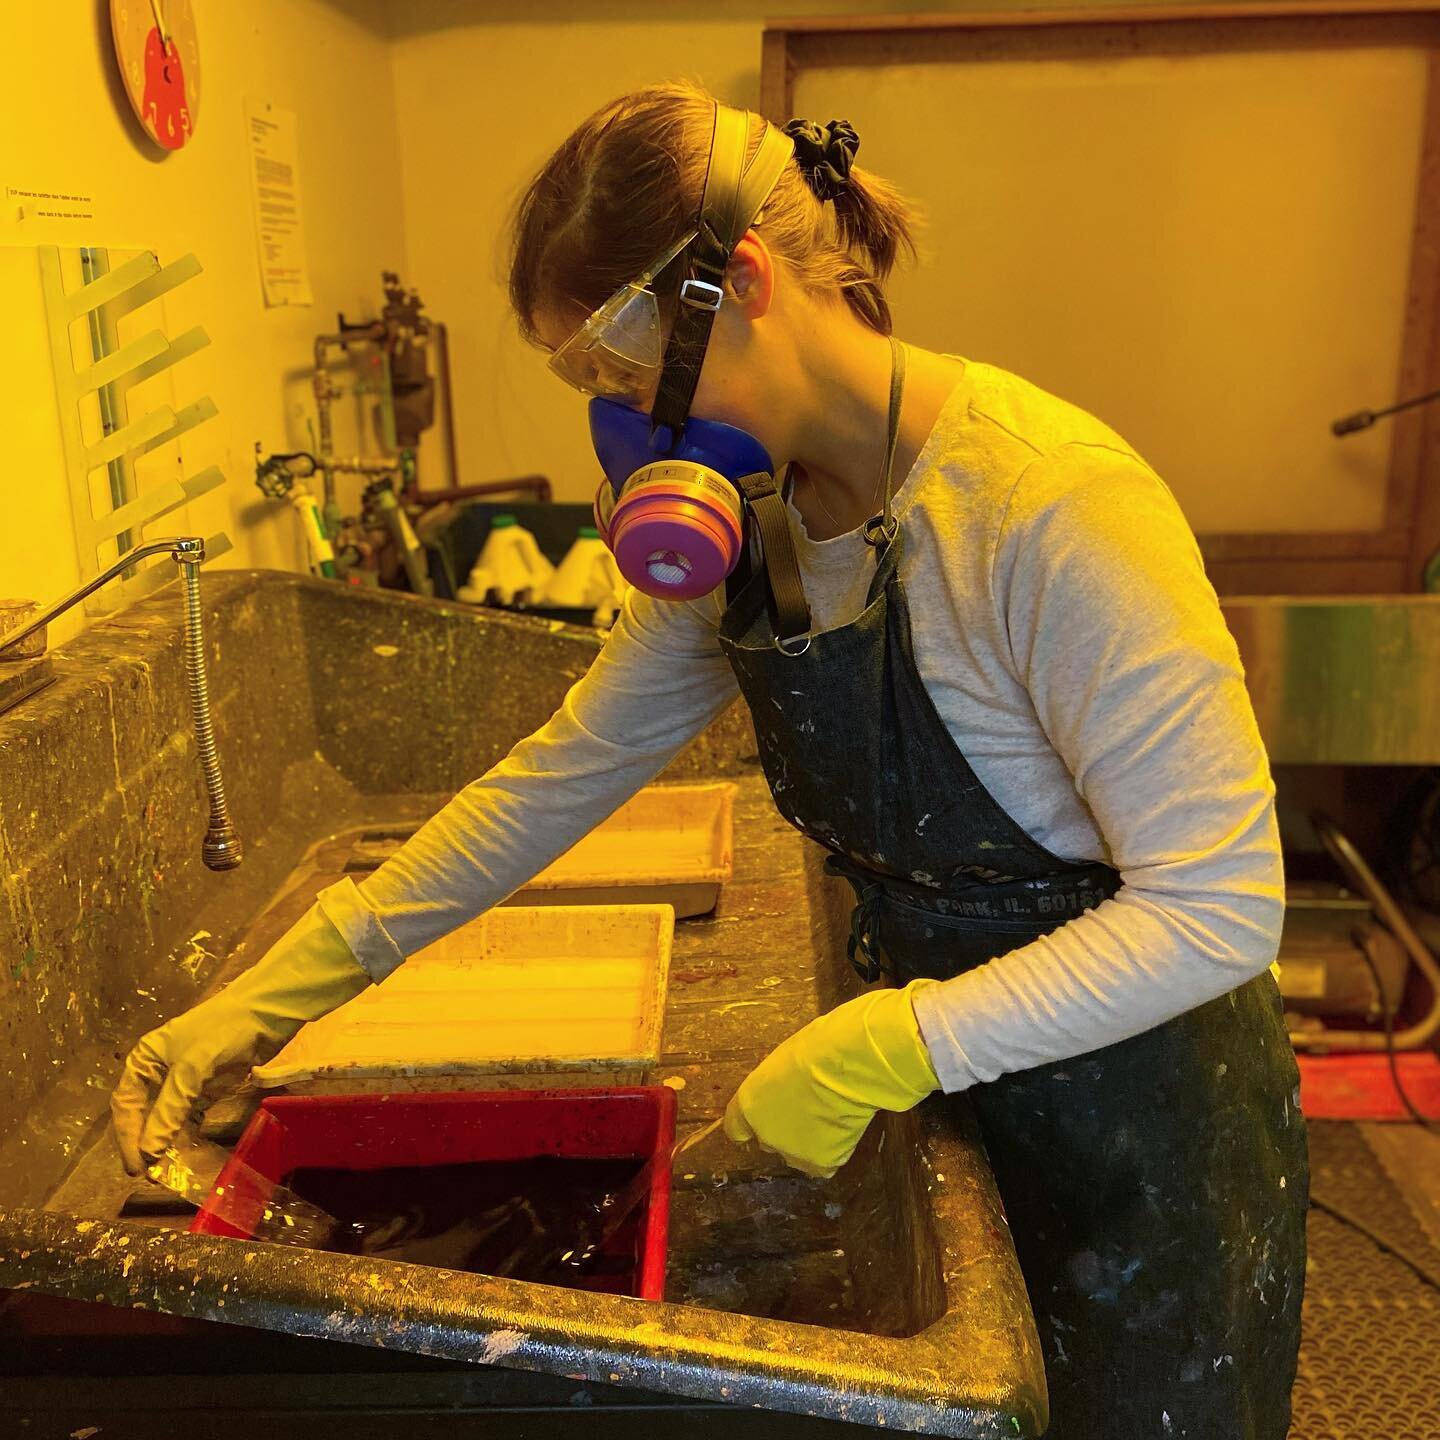 Alisa Arsenault travaille ses plaques de cuivre ce matin, en pleine s&eacute;curit&eacute;! 🚧 Safety first when working with chemicals!